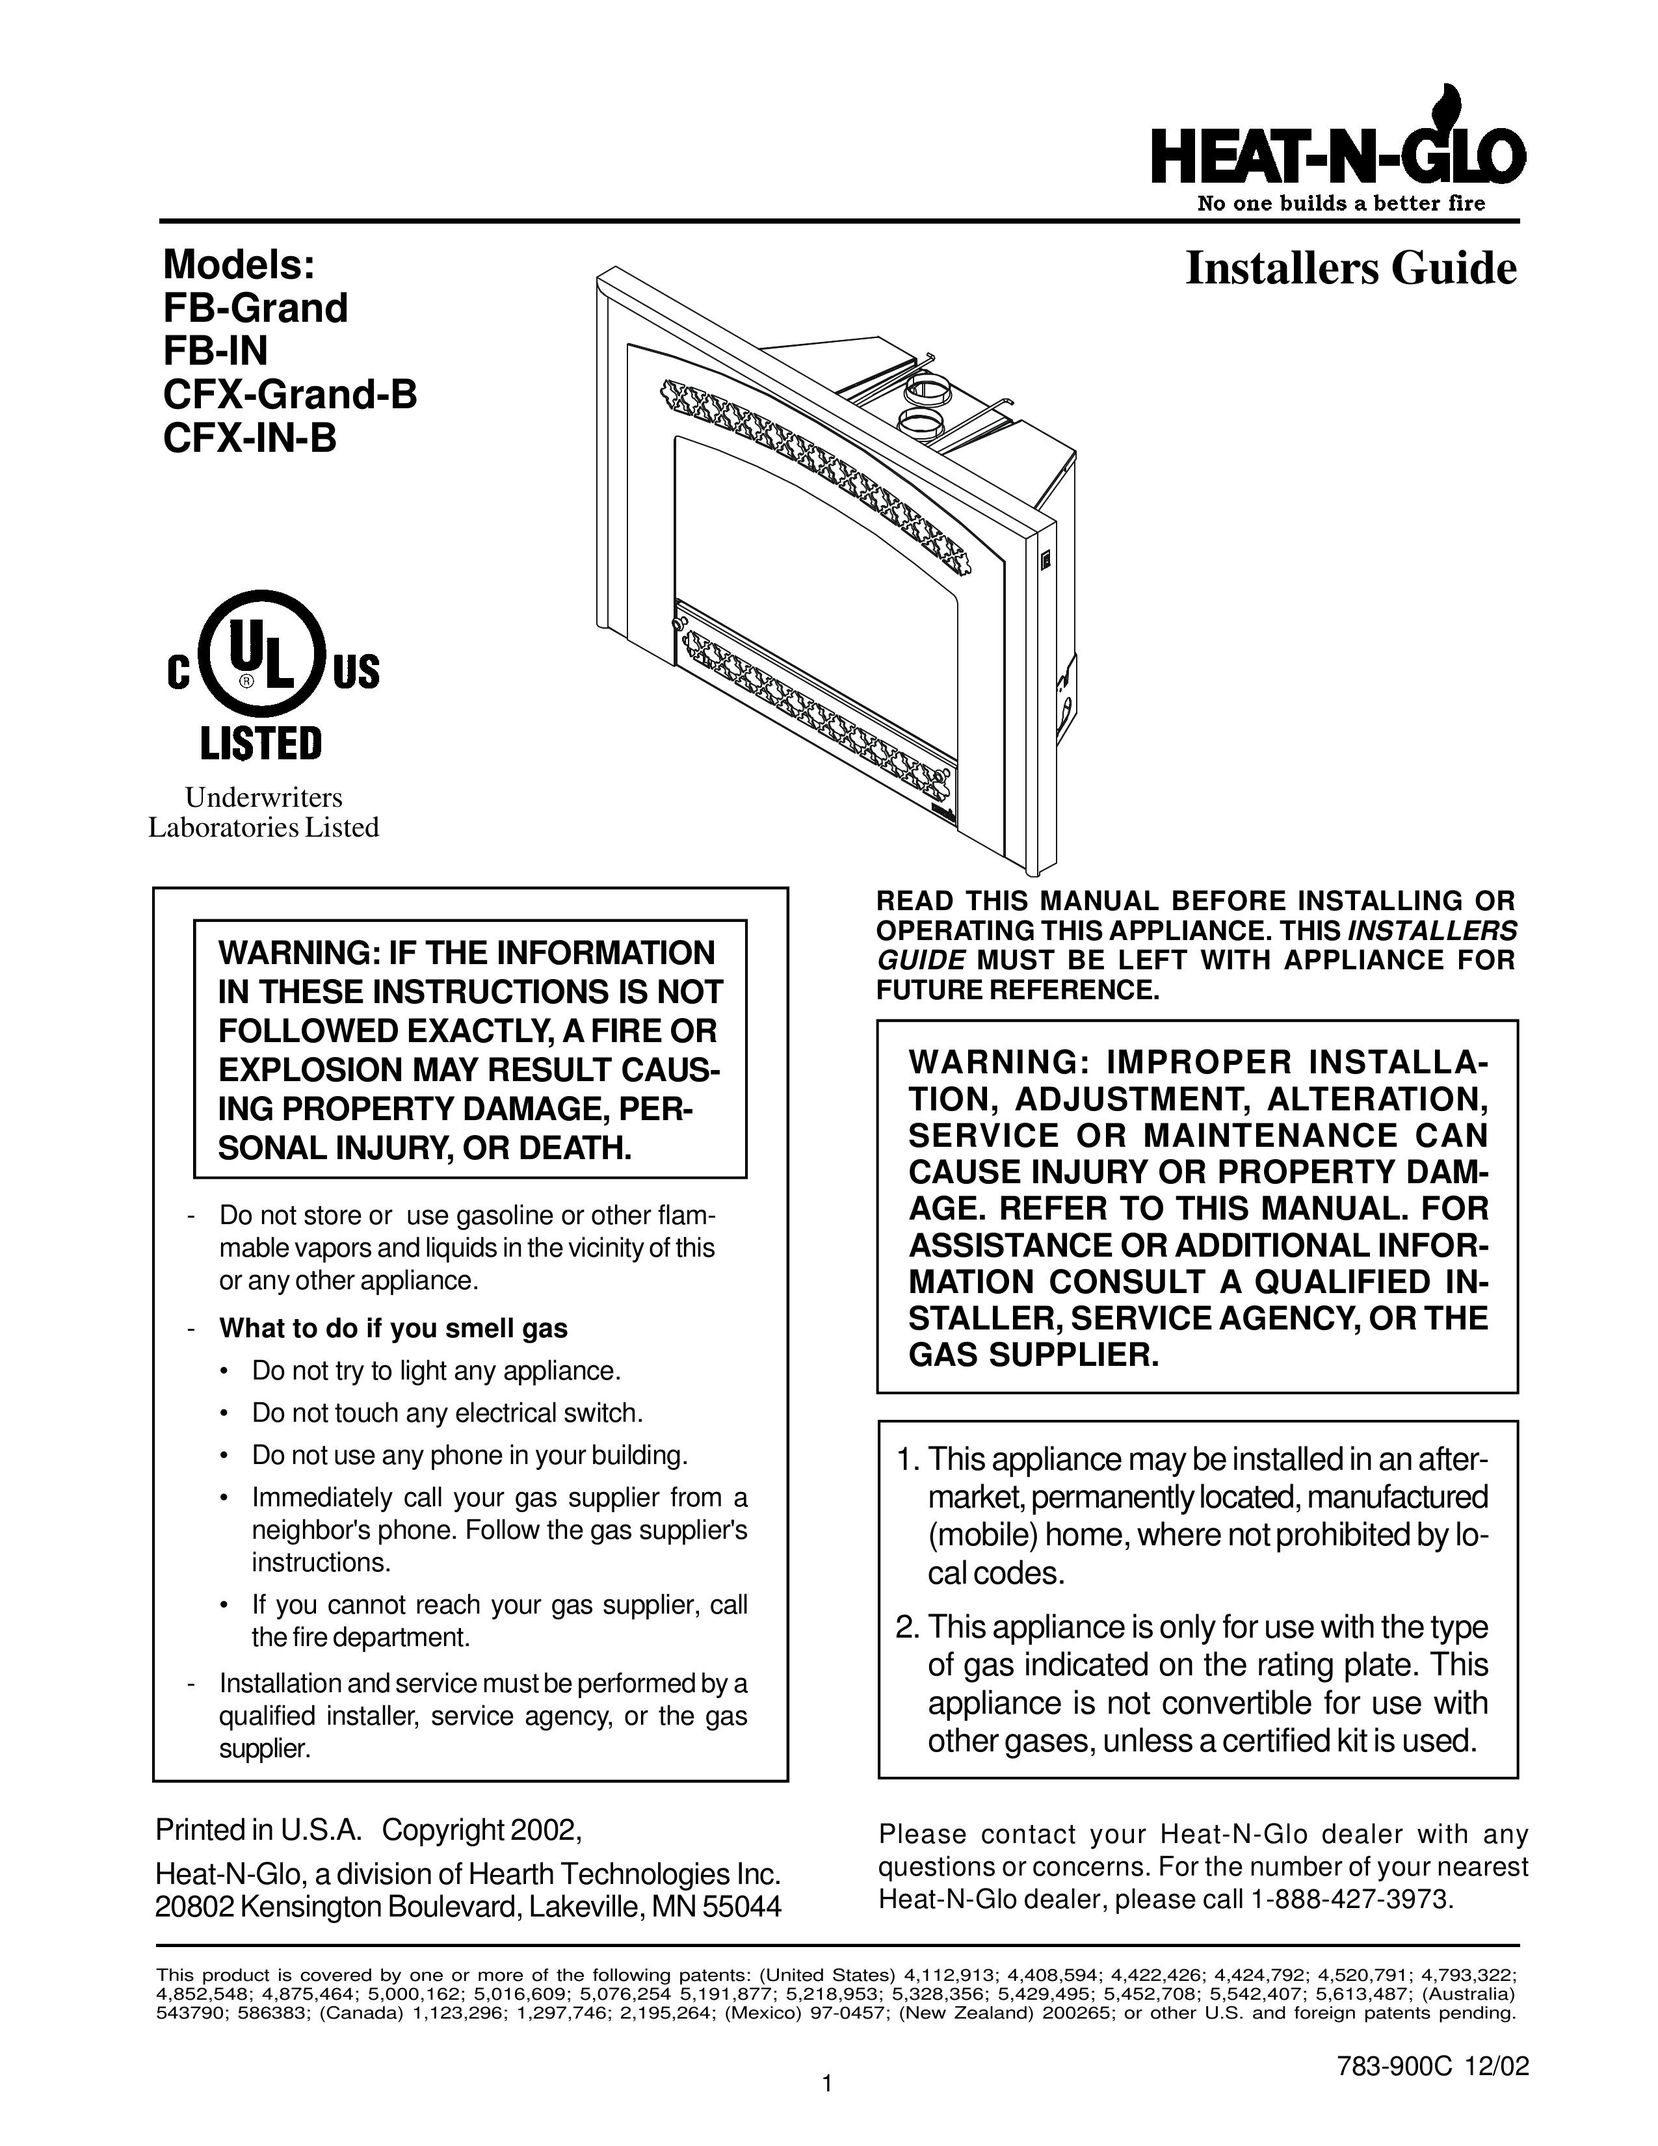 Heat & Glo LifeStyle CFX-IN-B Stove User Manual